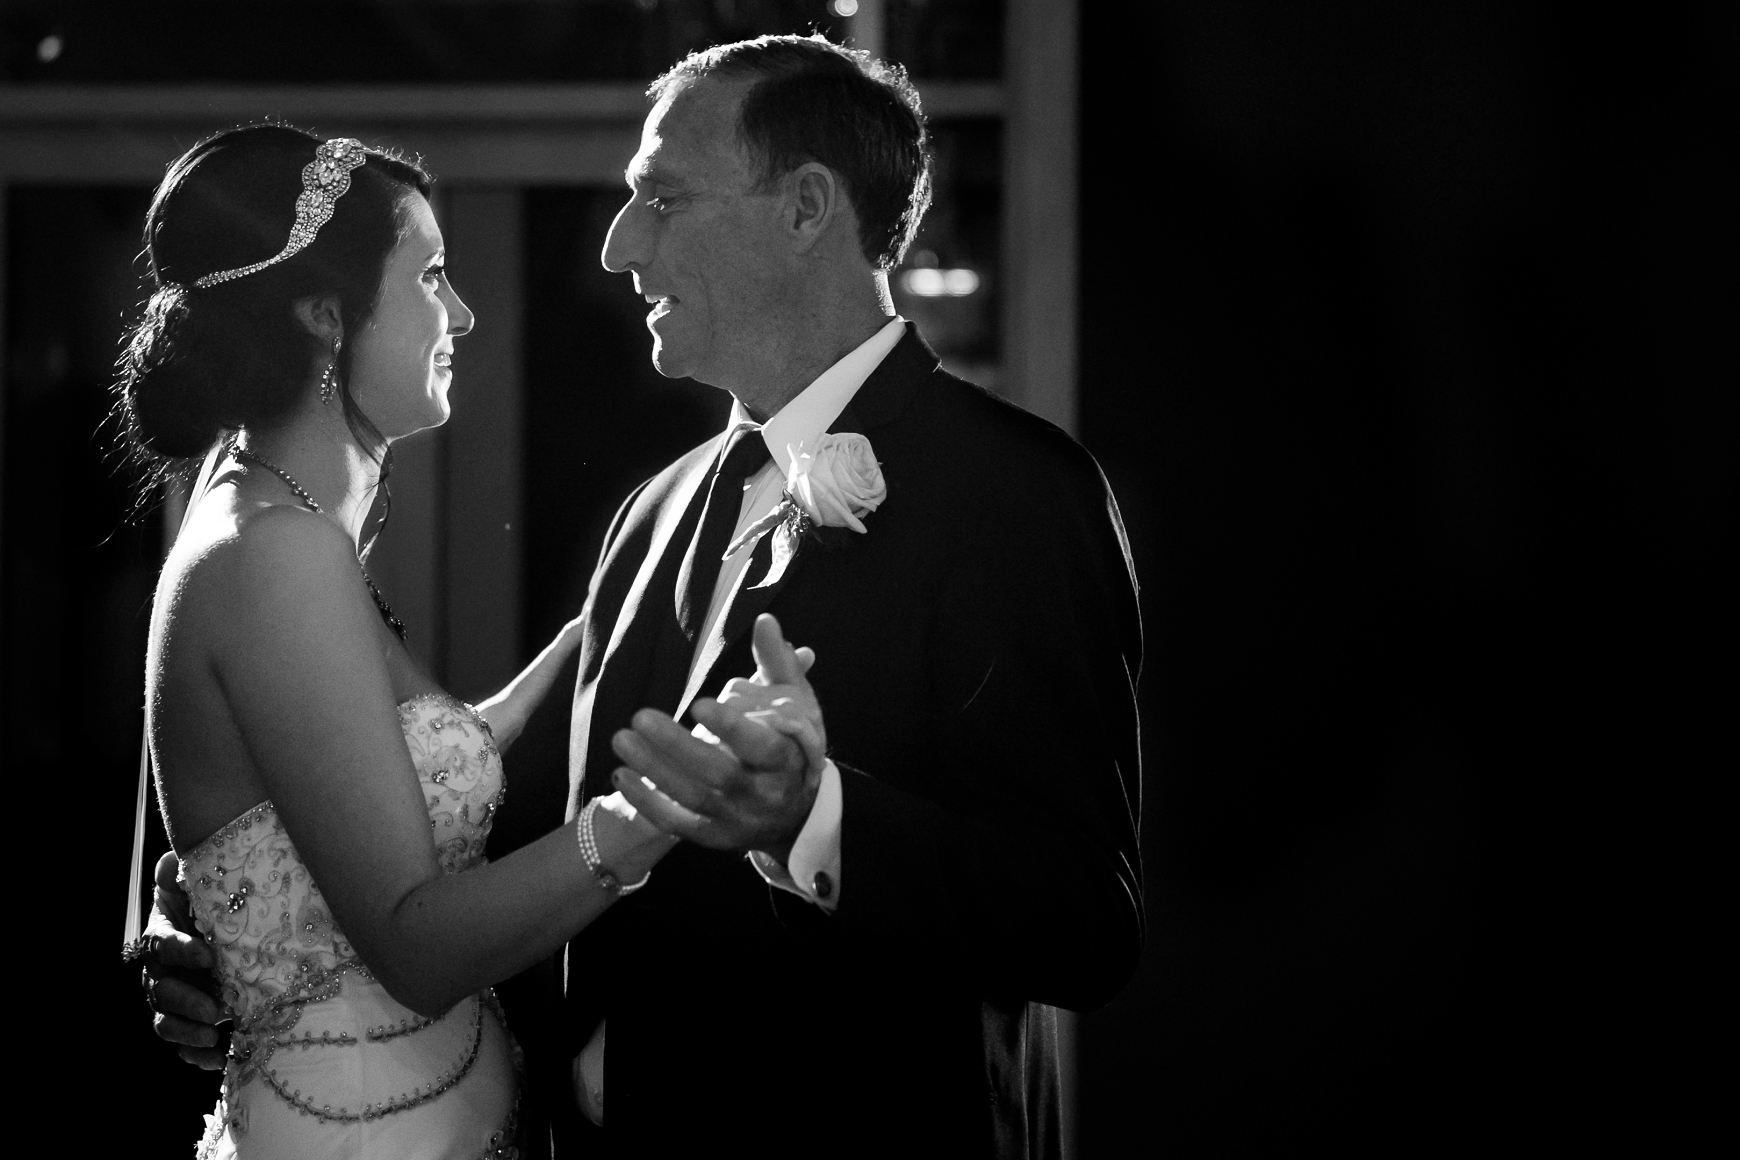 Gatsby themed wedding at Waldorf Astoria Hotel Chicago